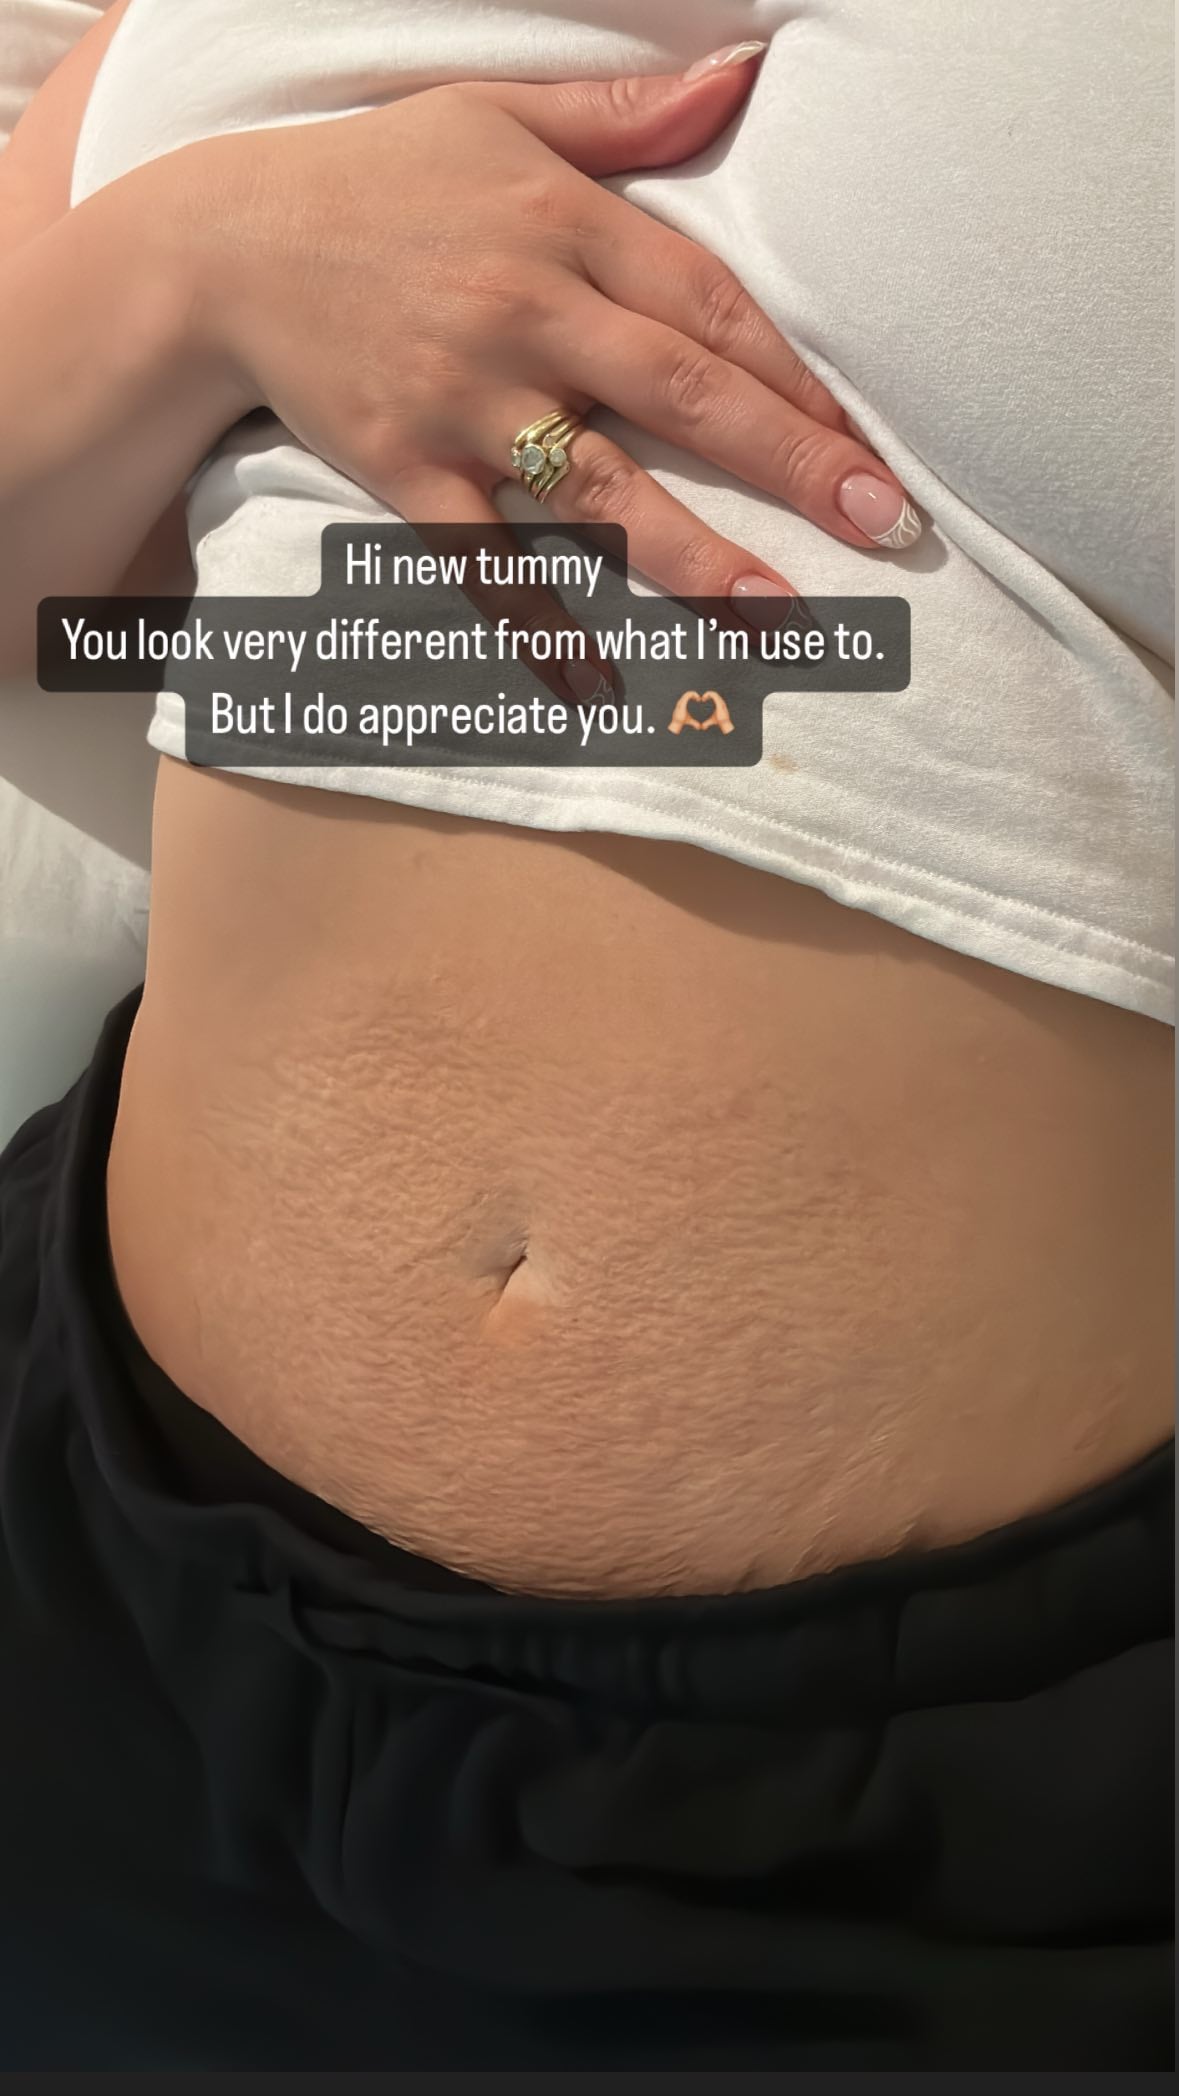 Ashley Graham shows off her postpartum body on Instagram Stories.